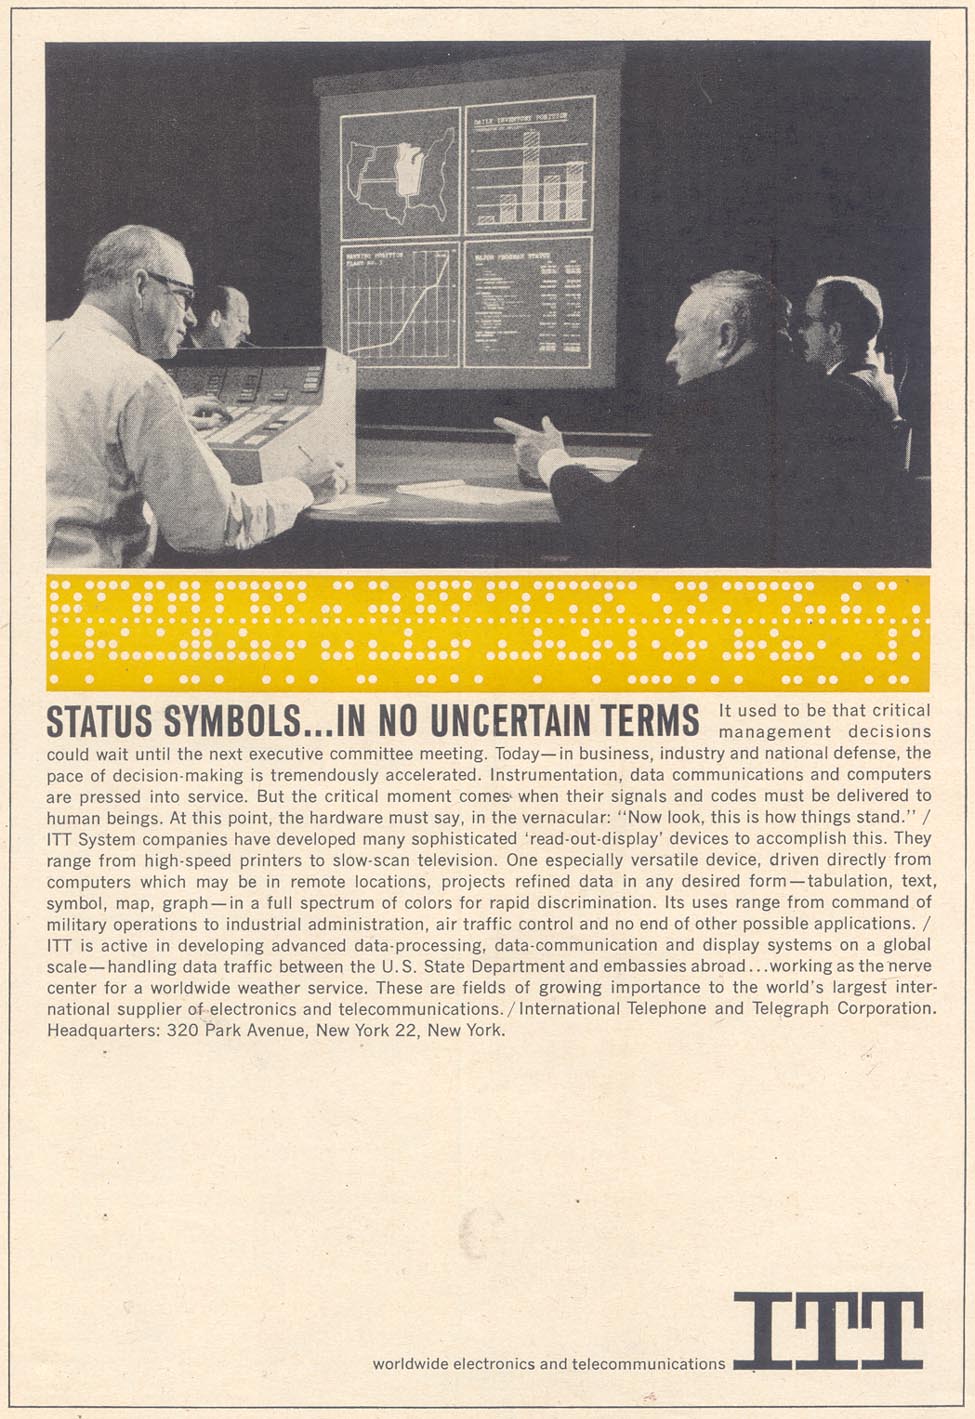 TELECOMMUNICATIONS EQUIPMENT
TIME
05/03/1963
p. 61